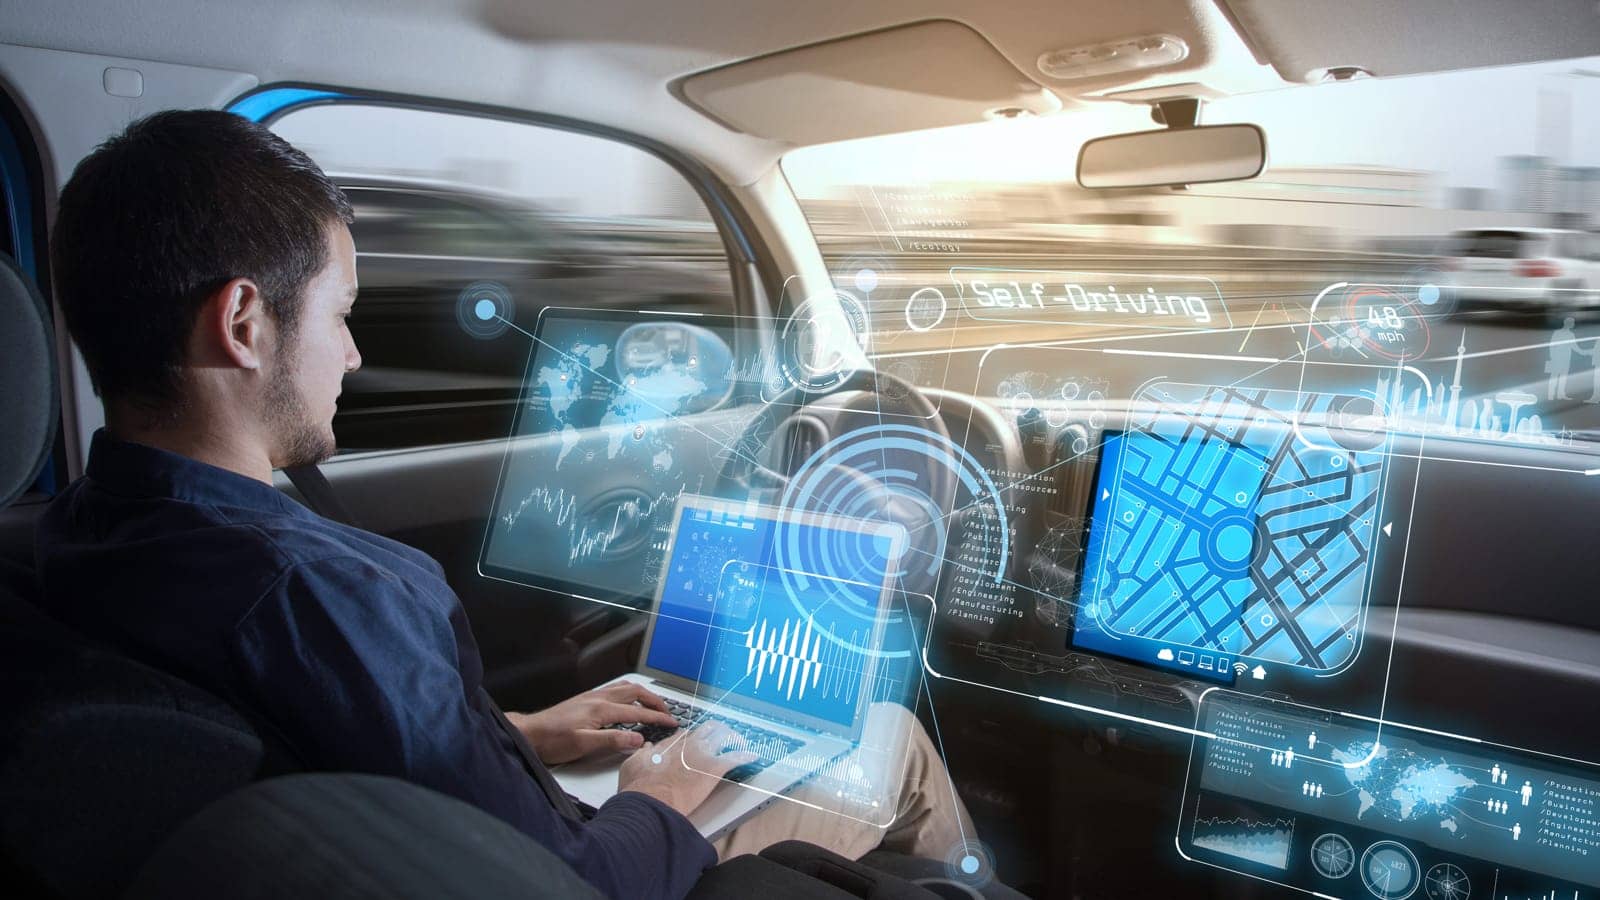 Futuristic self-driving car interface